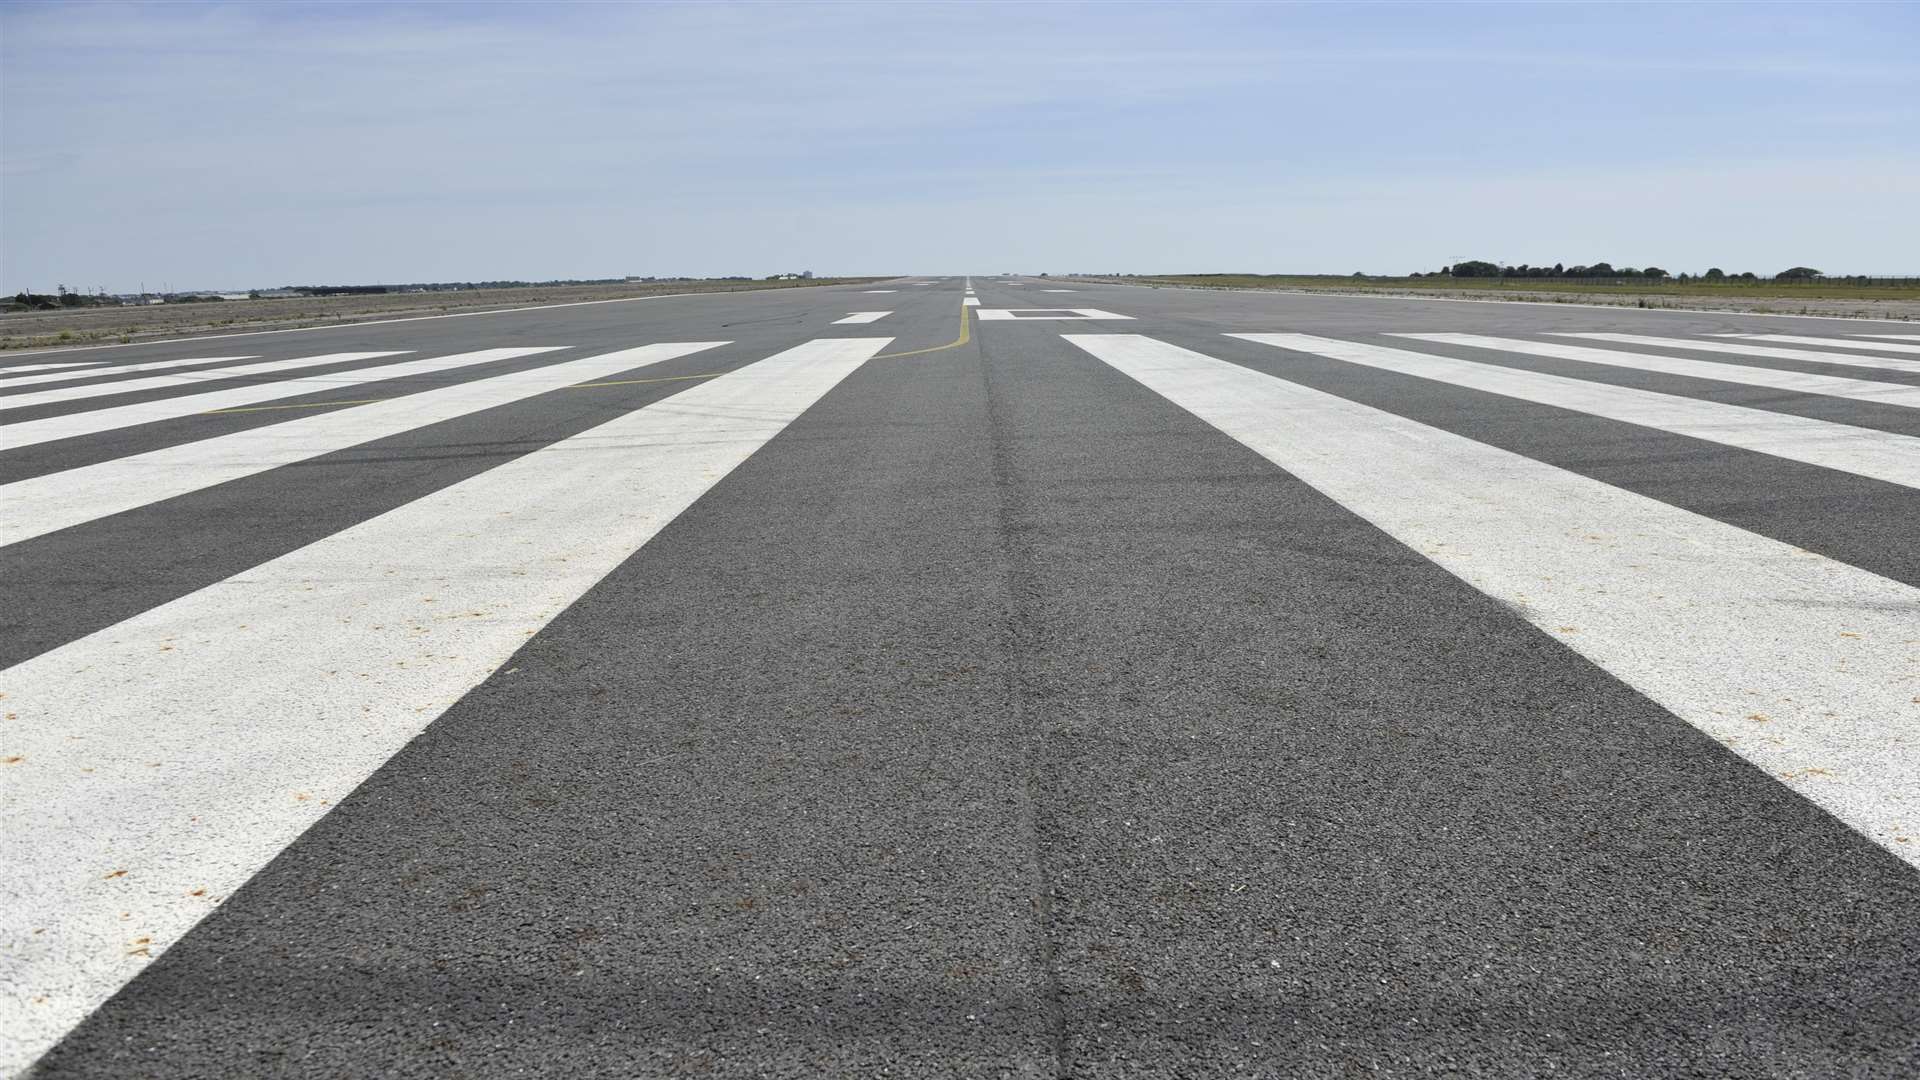 The Manston Airport runway